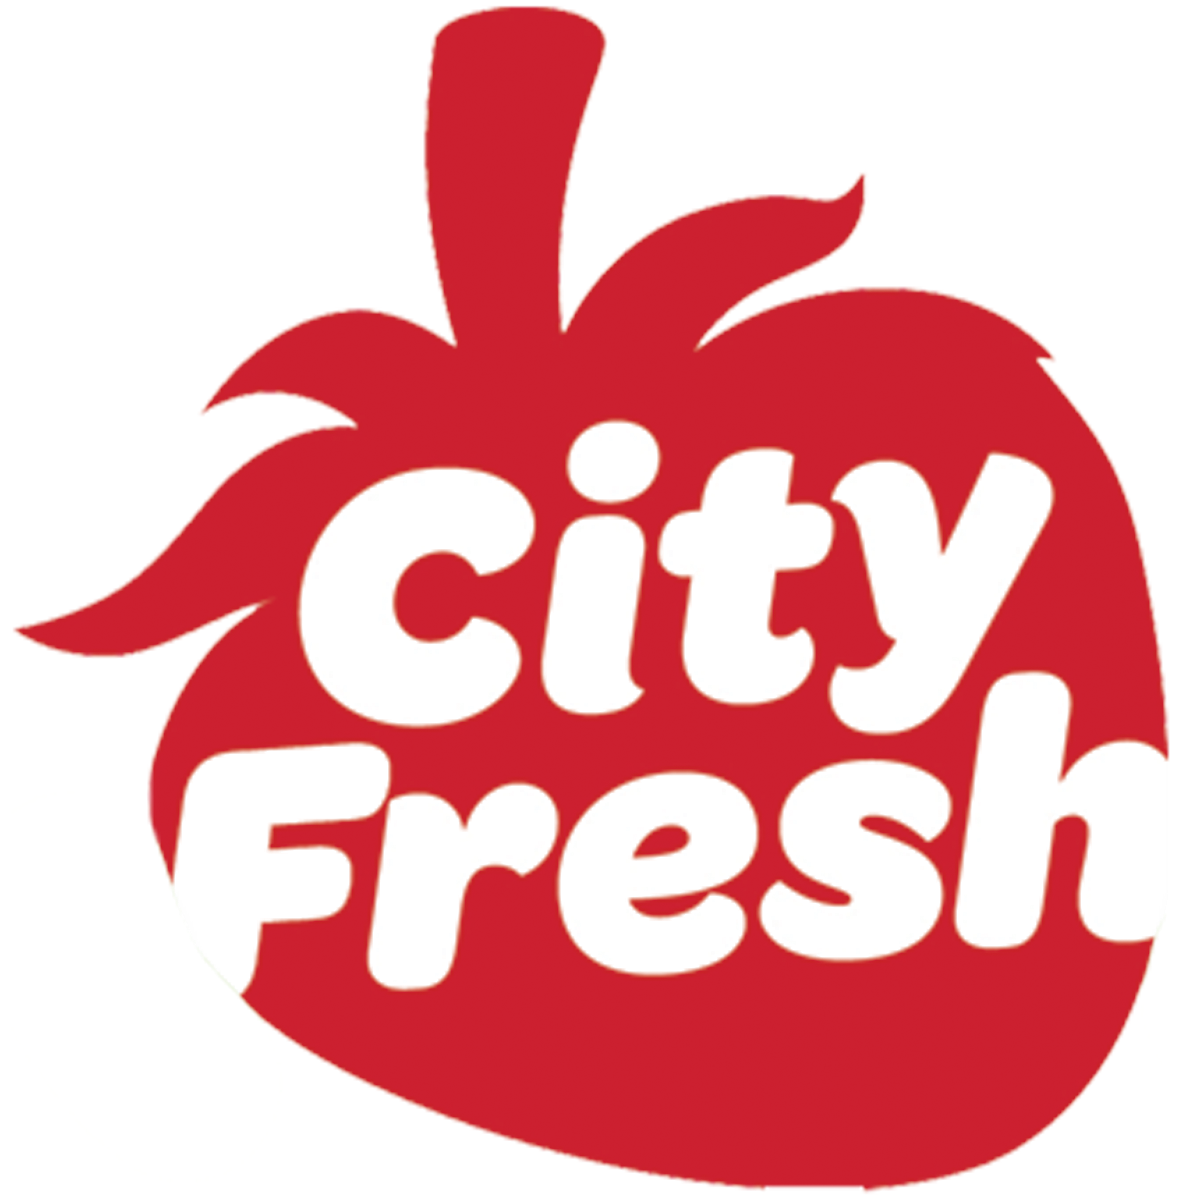 City Fresh